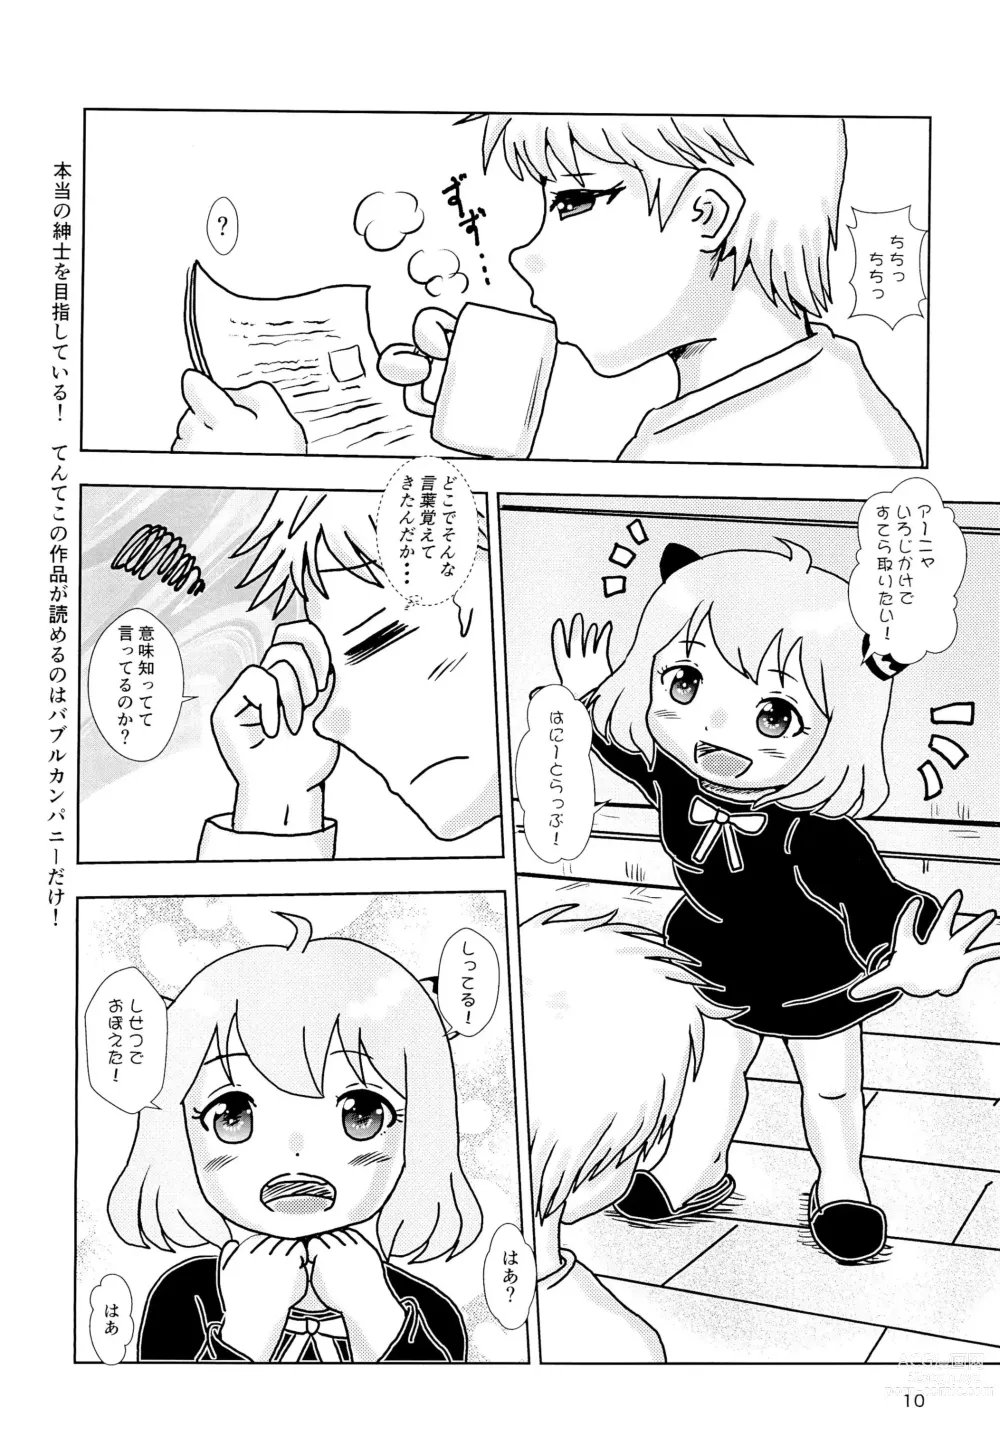 Page 10 of doujinshi Spys Girls